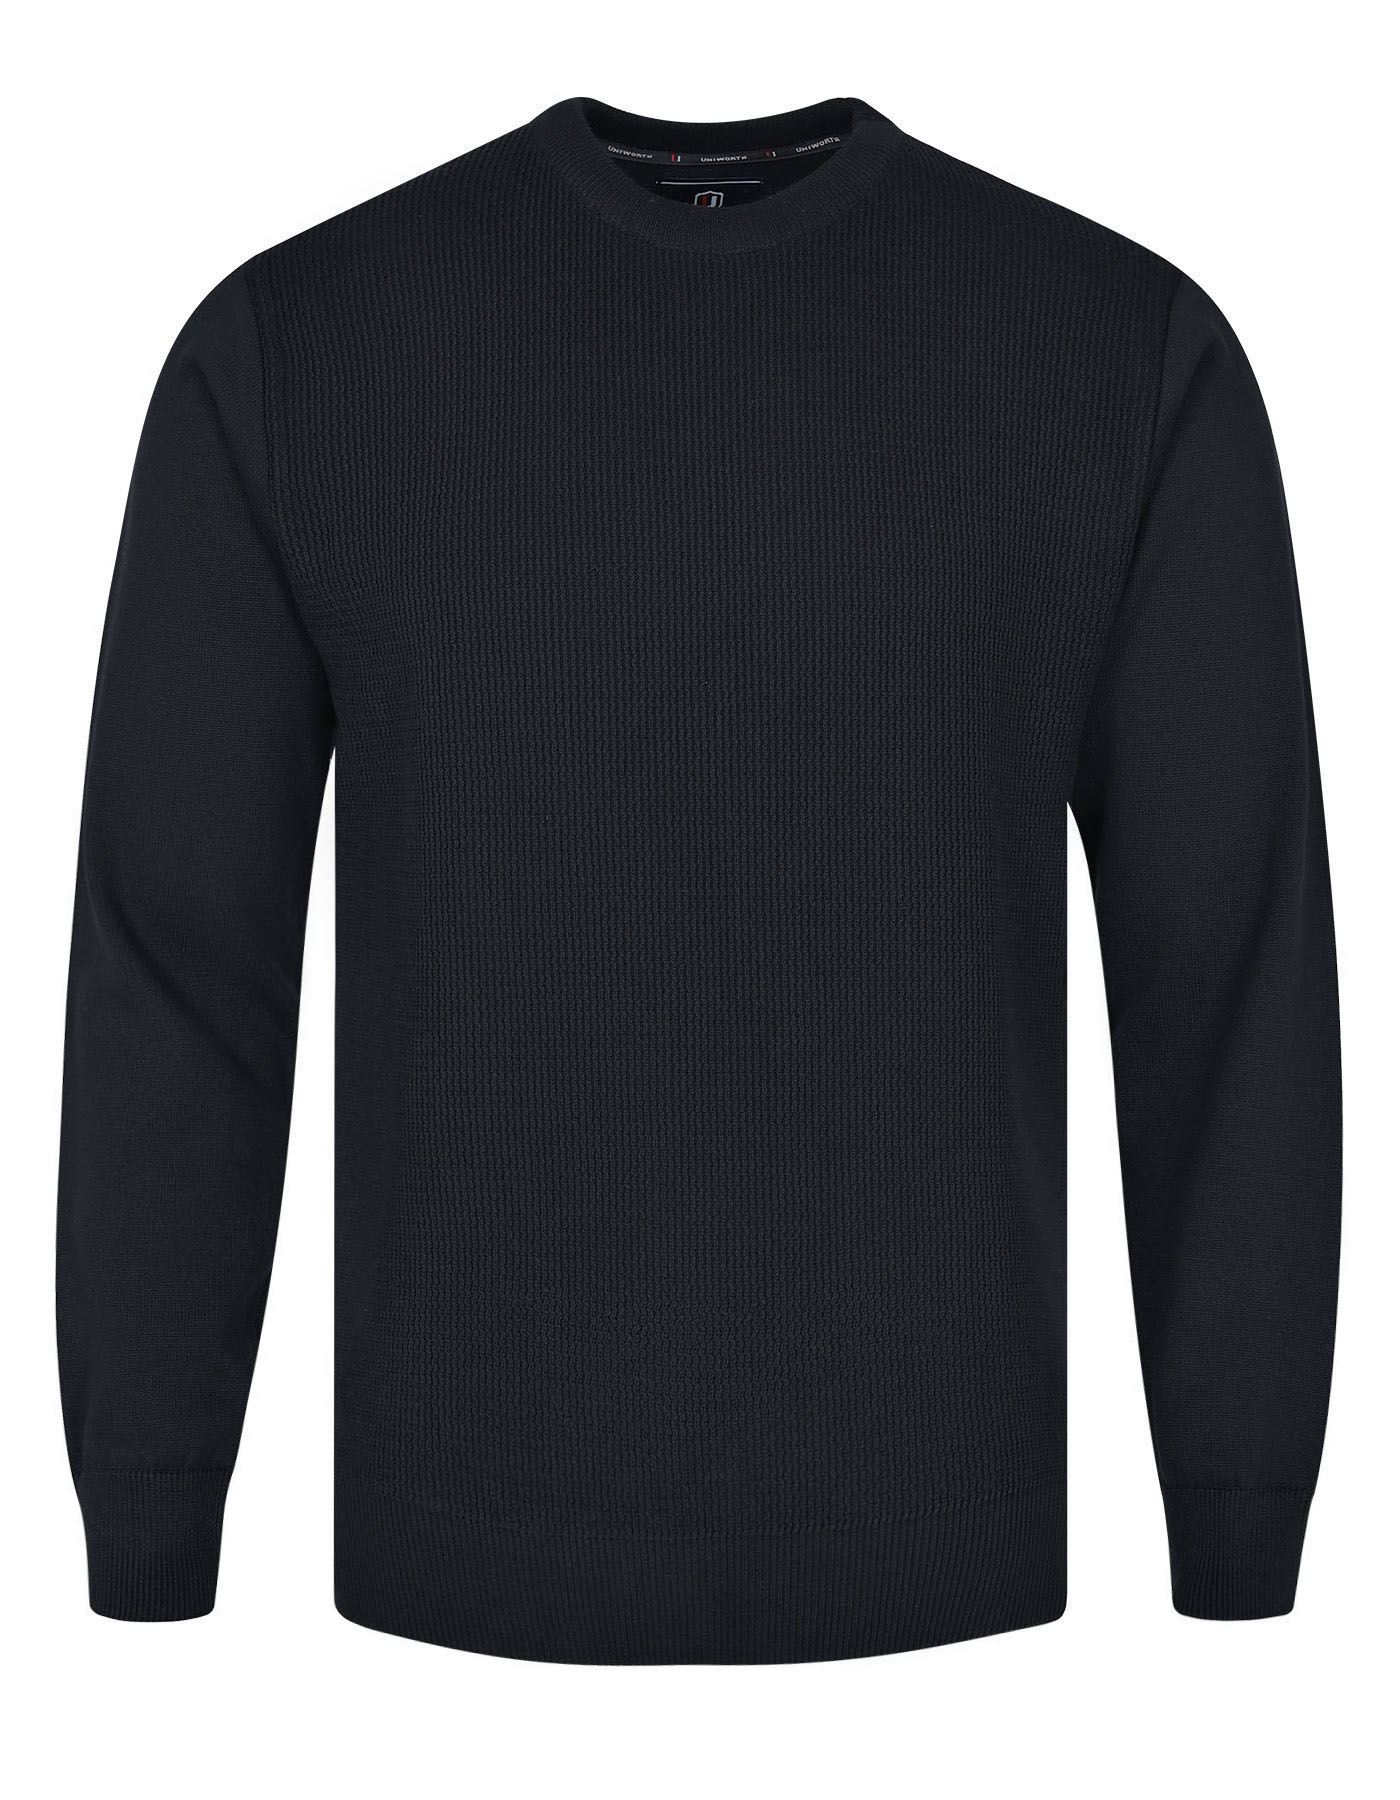 Black Crew Neck Sweater For Men